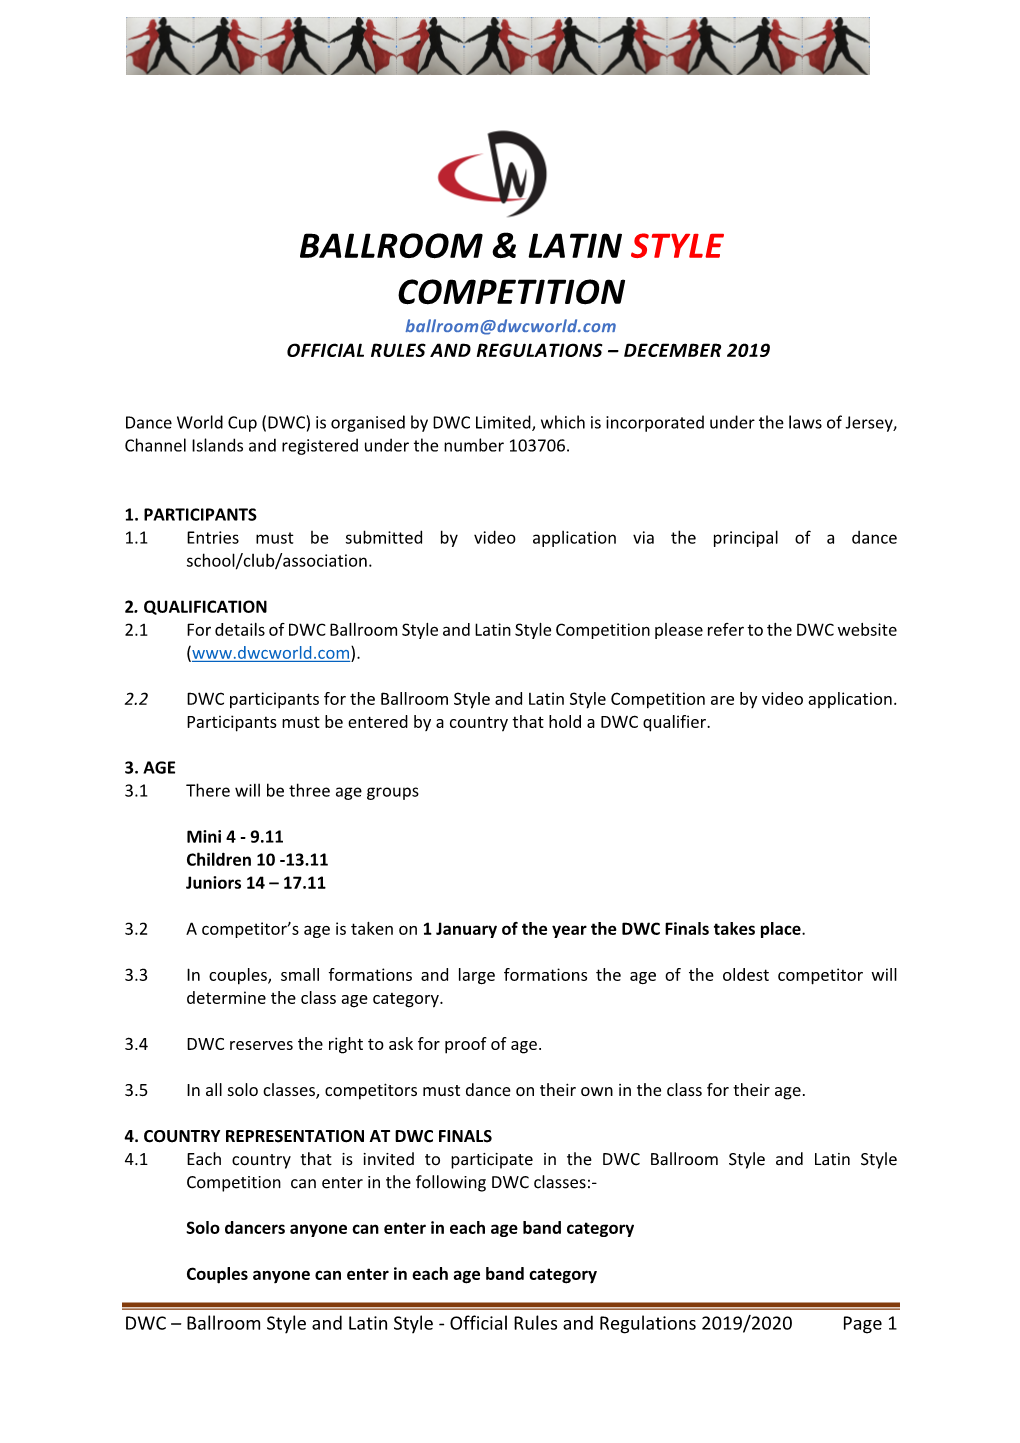 Ballroom & Latin Style Competition